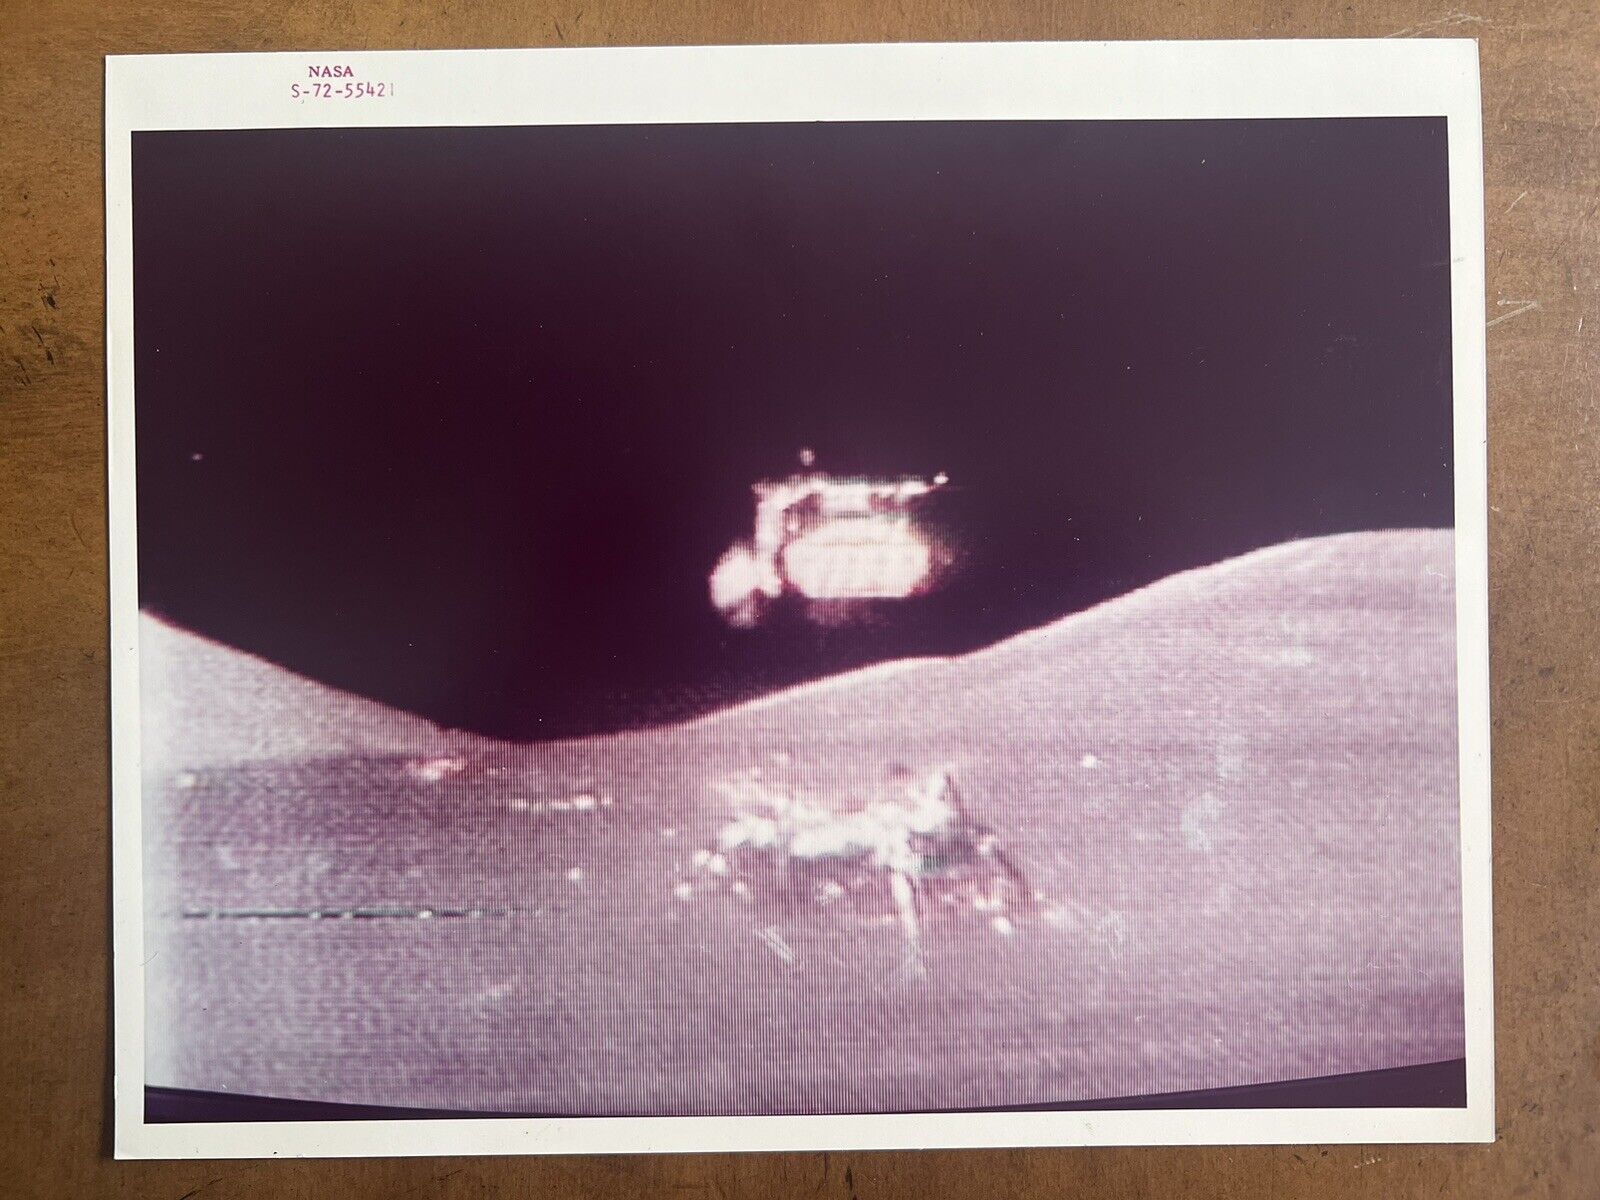 NASA Kodak Photo Red Number - S-72-55421 Apollo 17 TV Picture/LM Liftoff